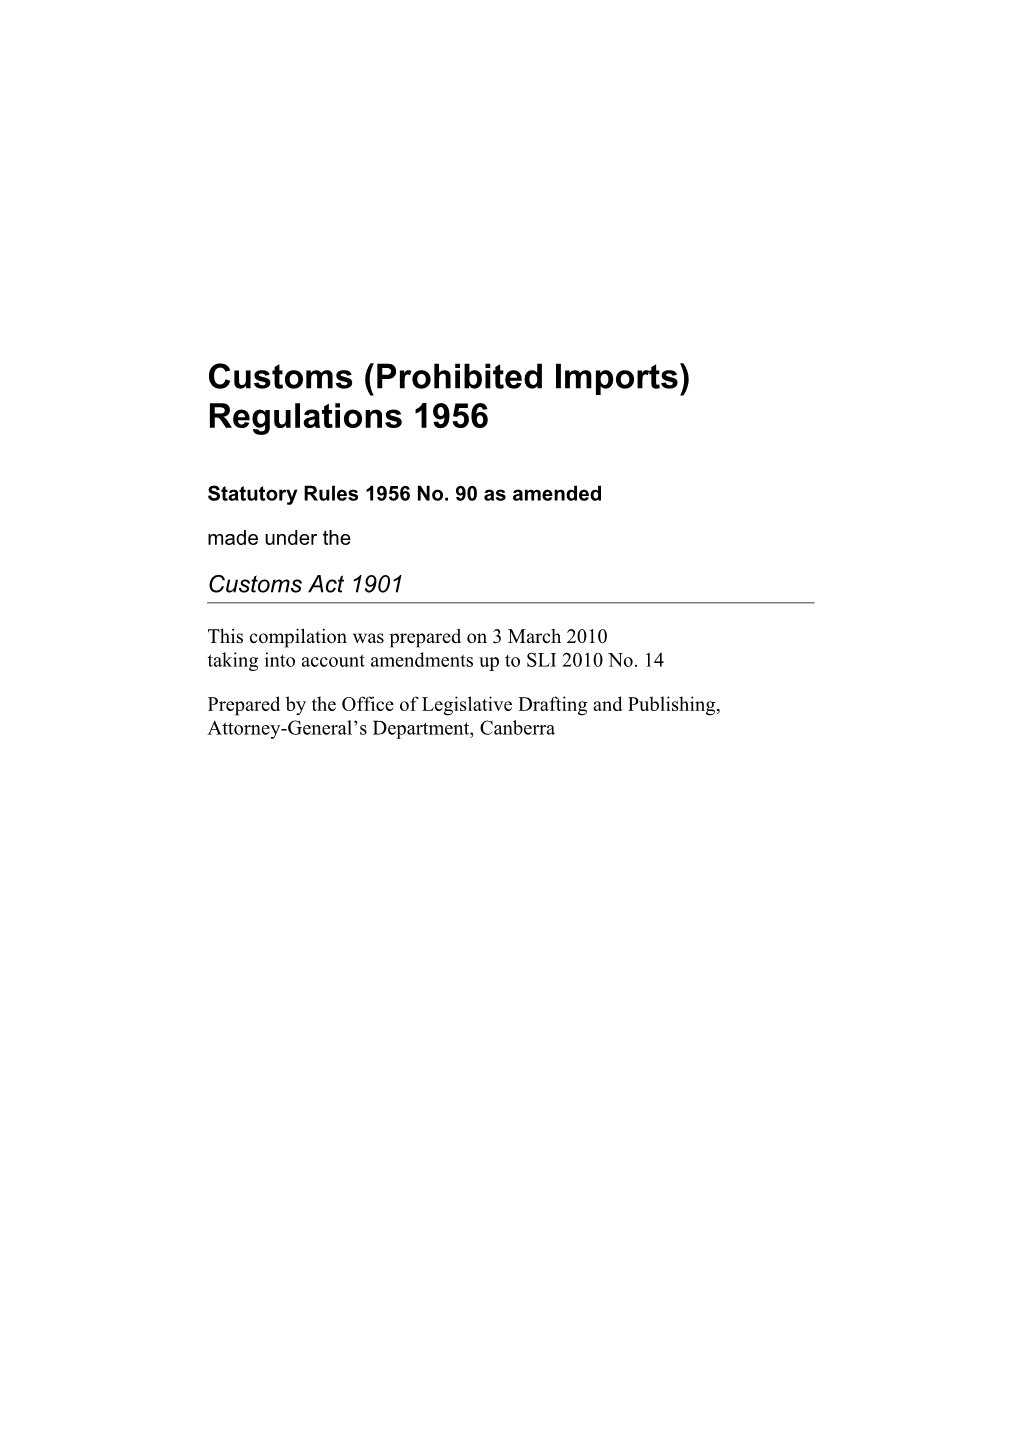 Customs (Prohibited Imports) Regulations 1956